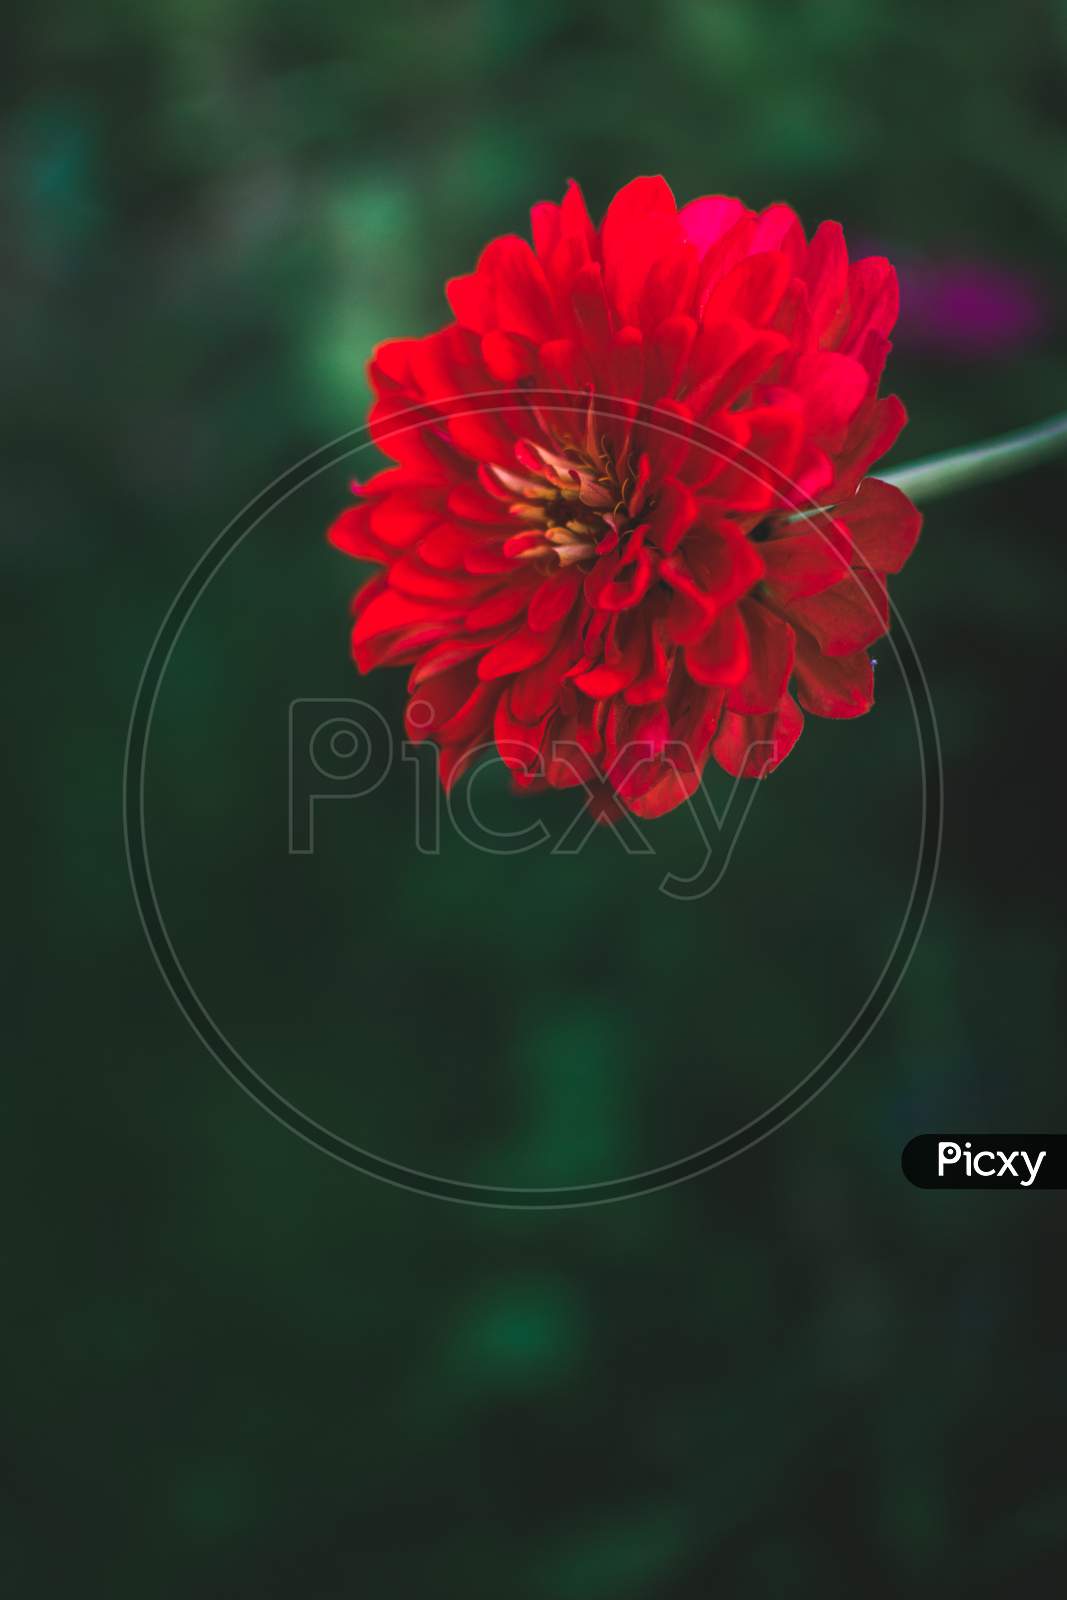 Common zinnia Flowers